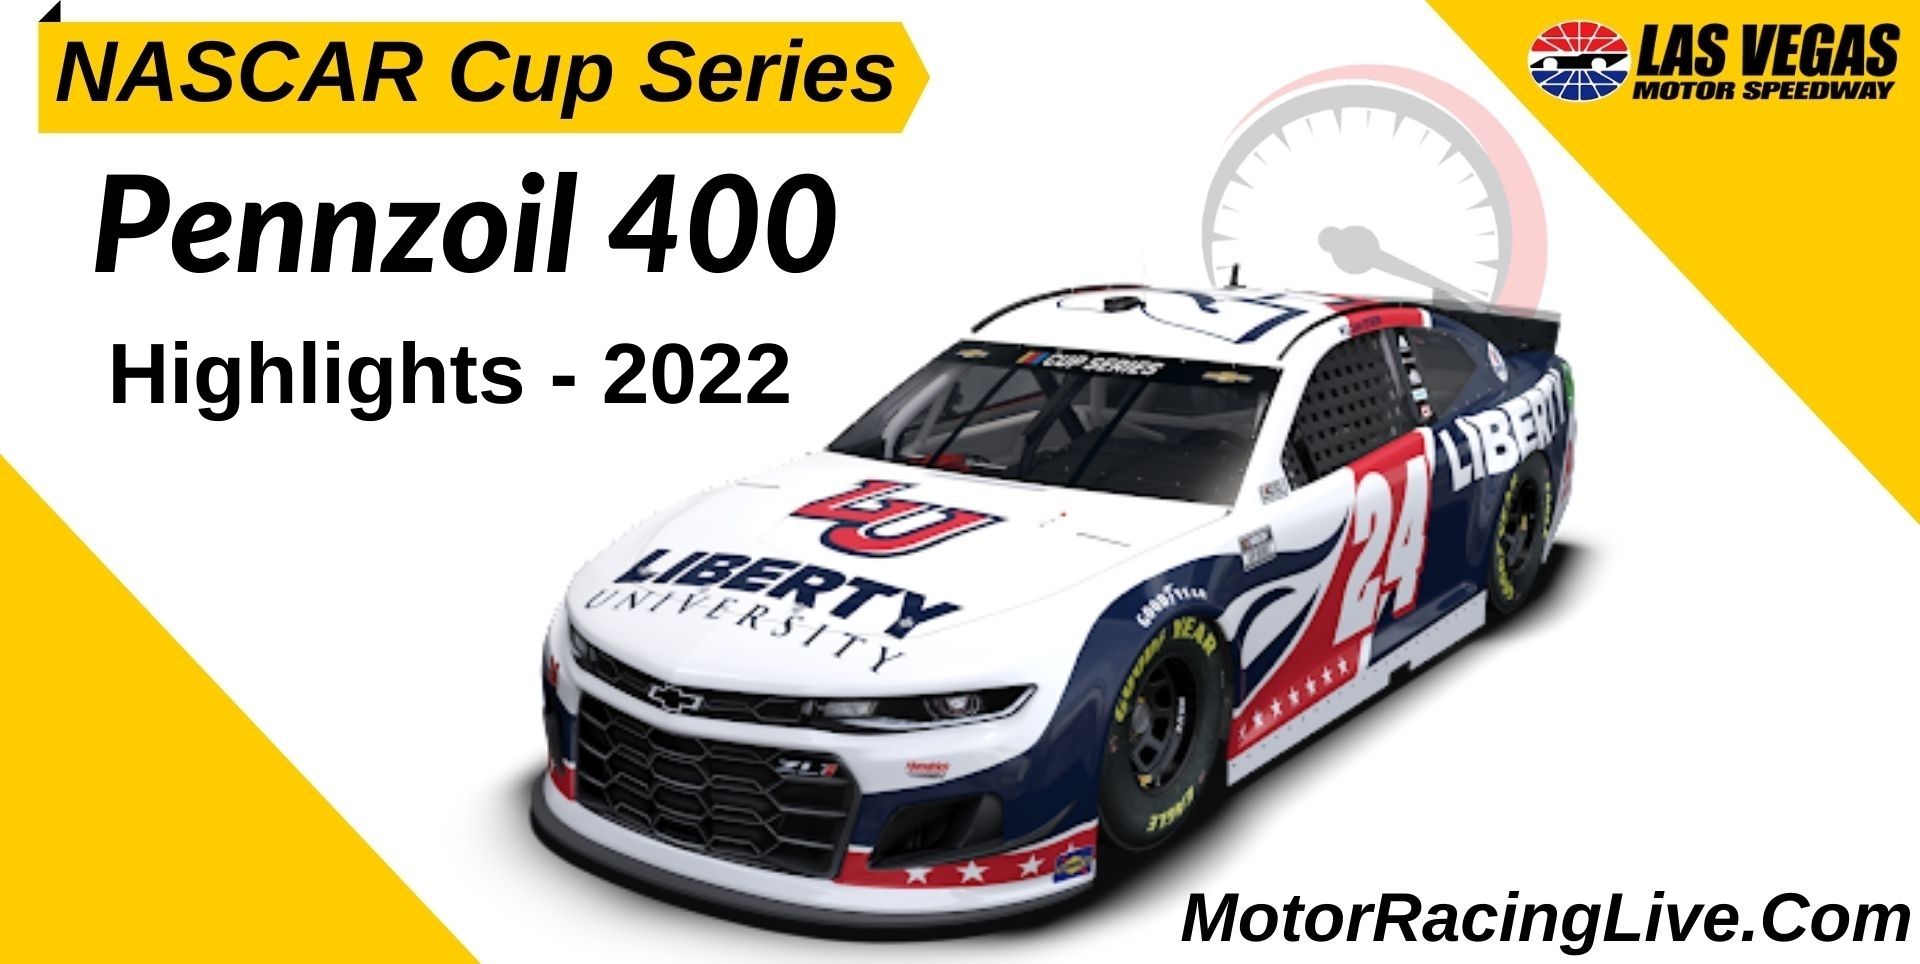 Pennzoil 400 Highlights 2022 NASCAR Cup Series